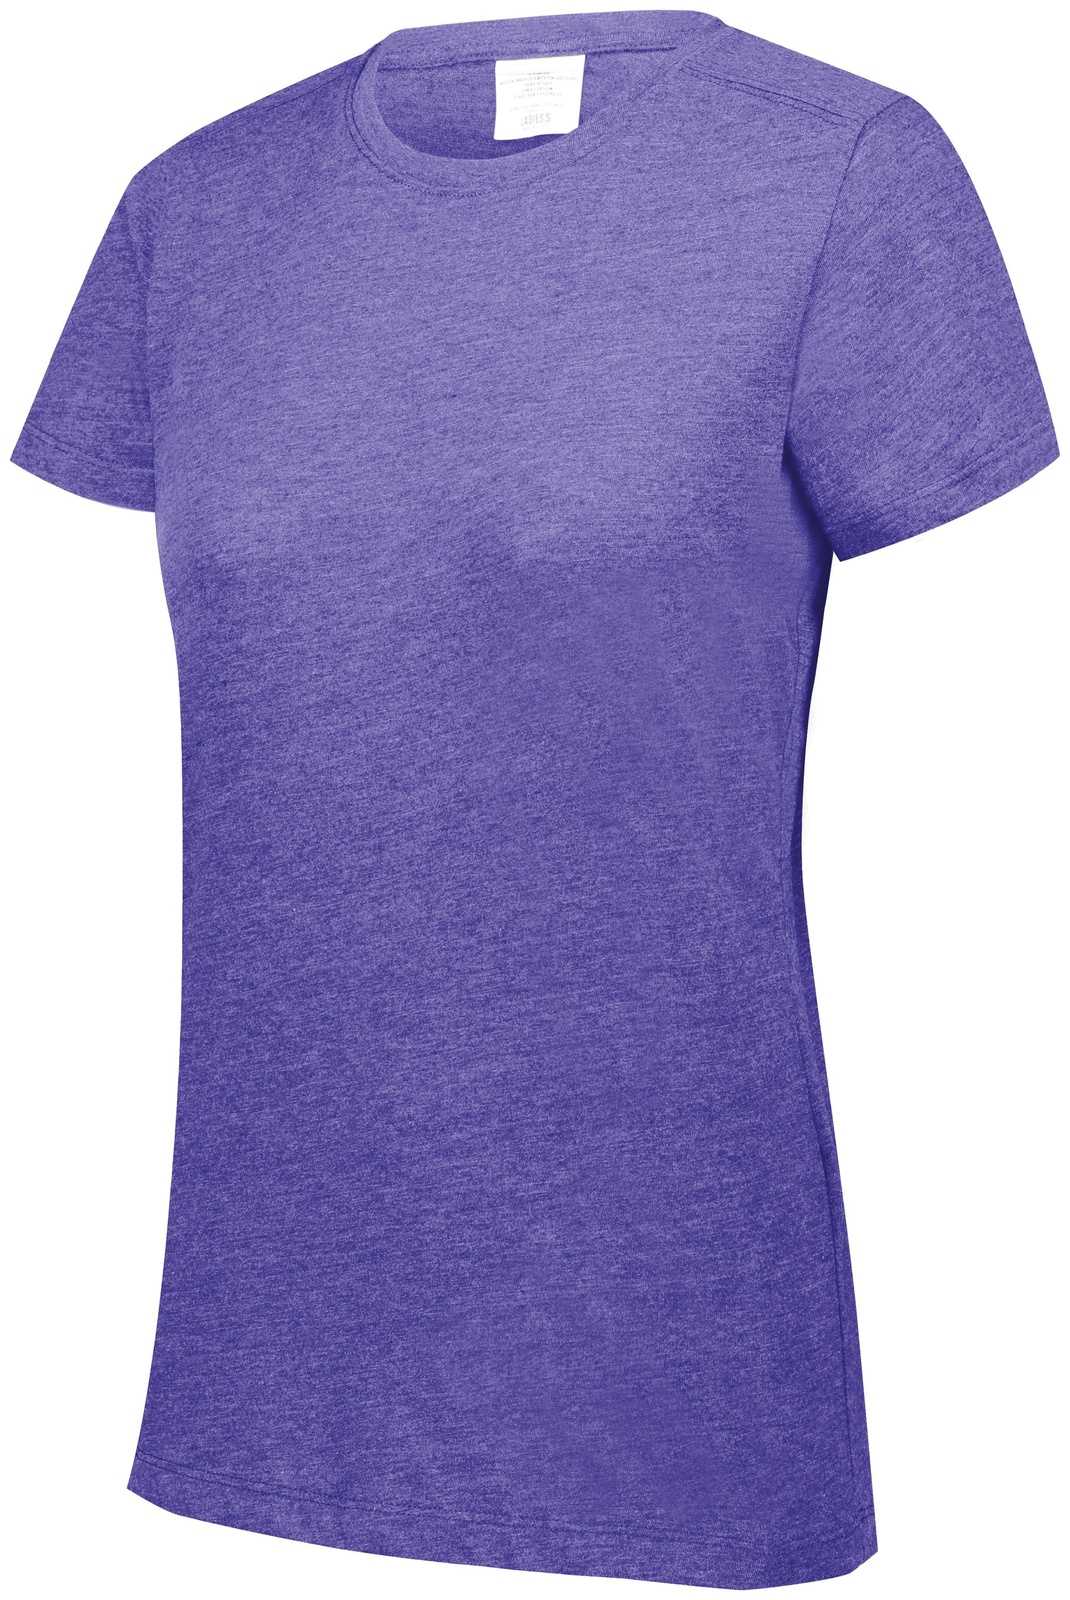 Augusta 3067 Ladies Tri-Blend T-Shirt - Purple Heather - HIT a Double